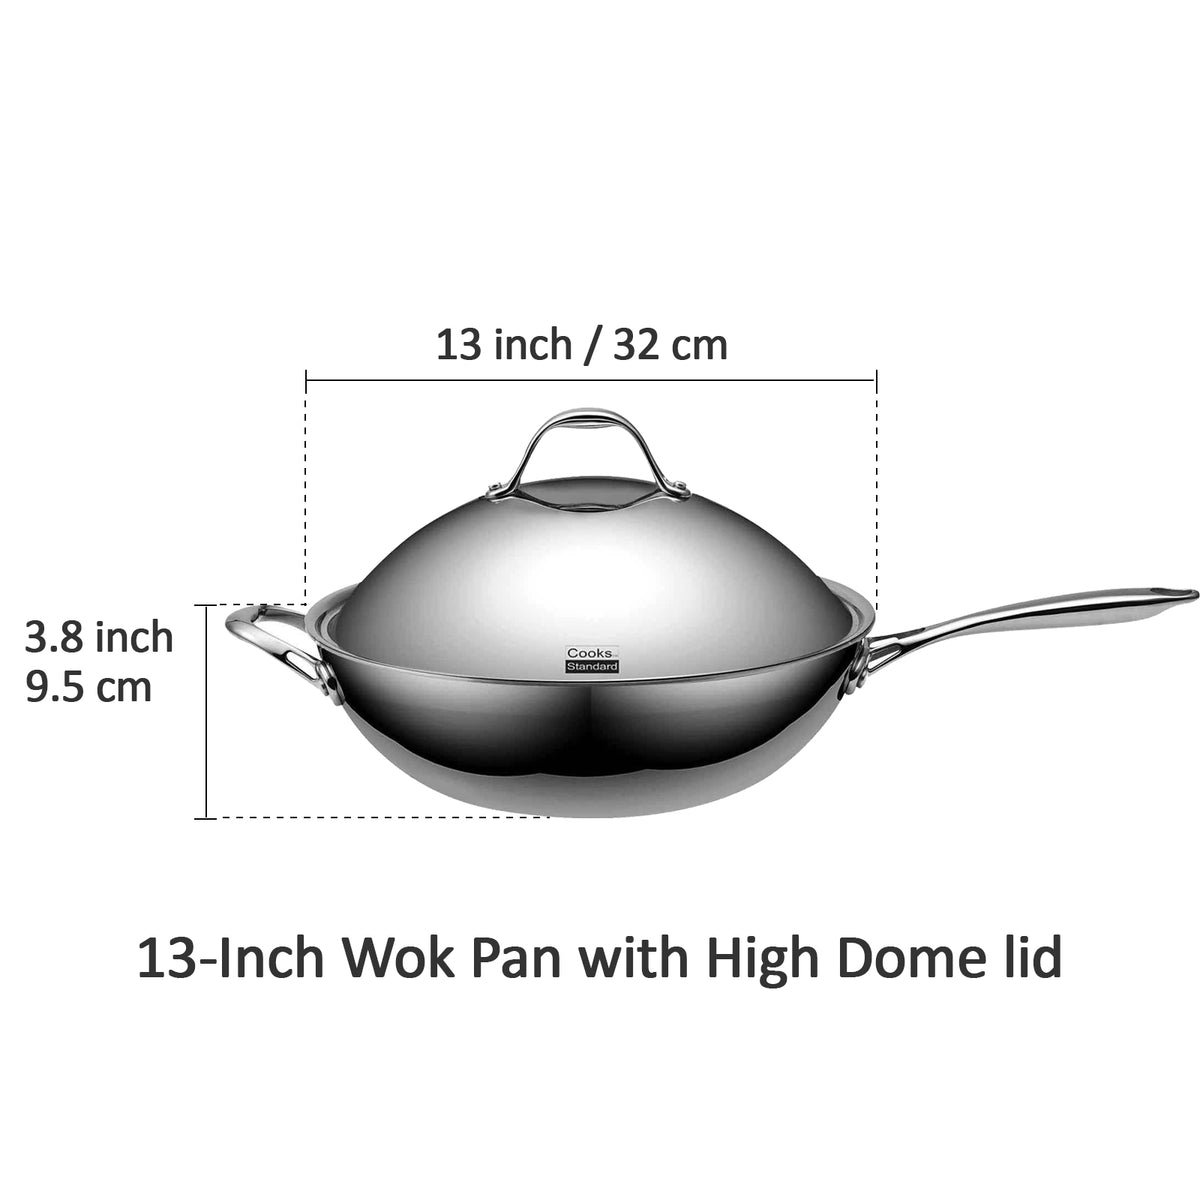 Cooks Standard Nonstick Stir-Fry Wok Pan 11-Inch, Hard Anodized Deep F